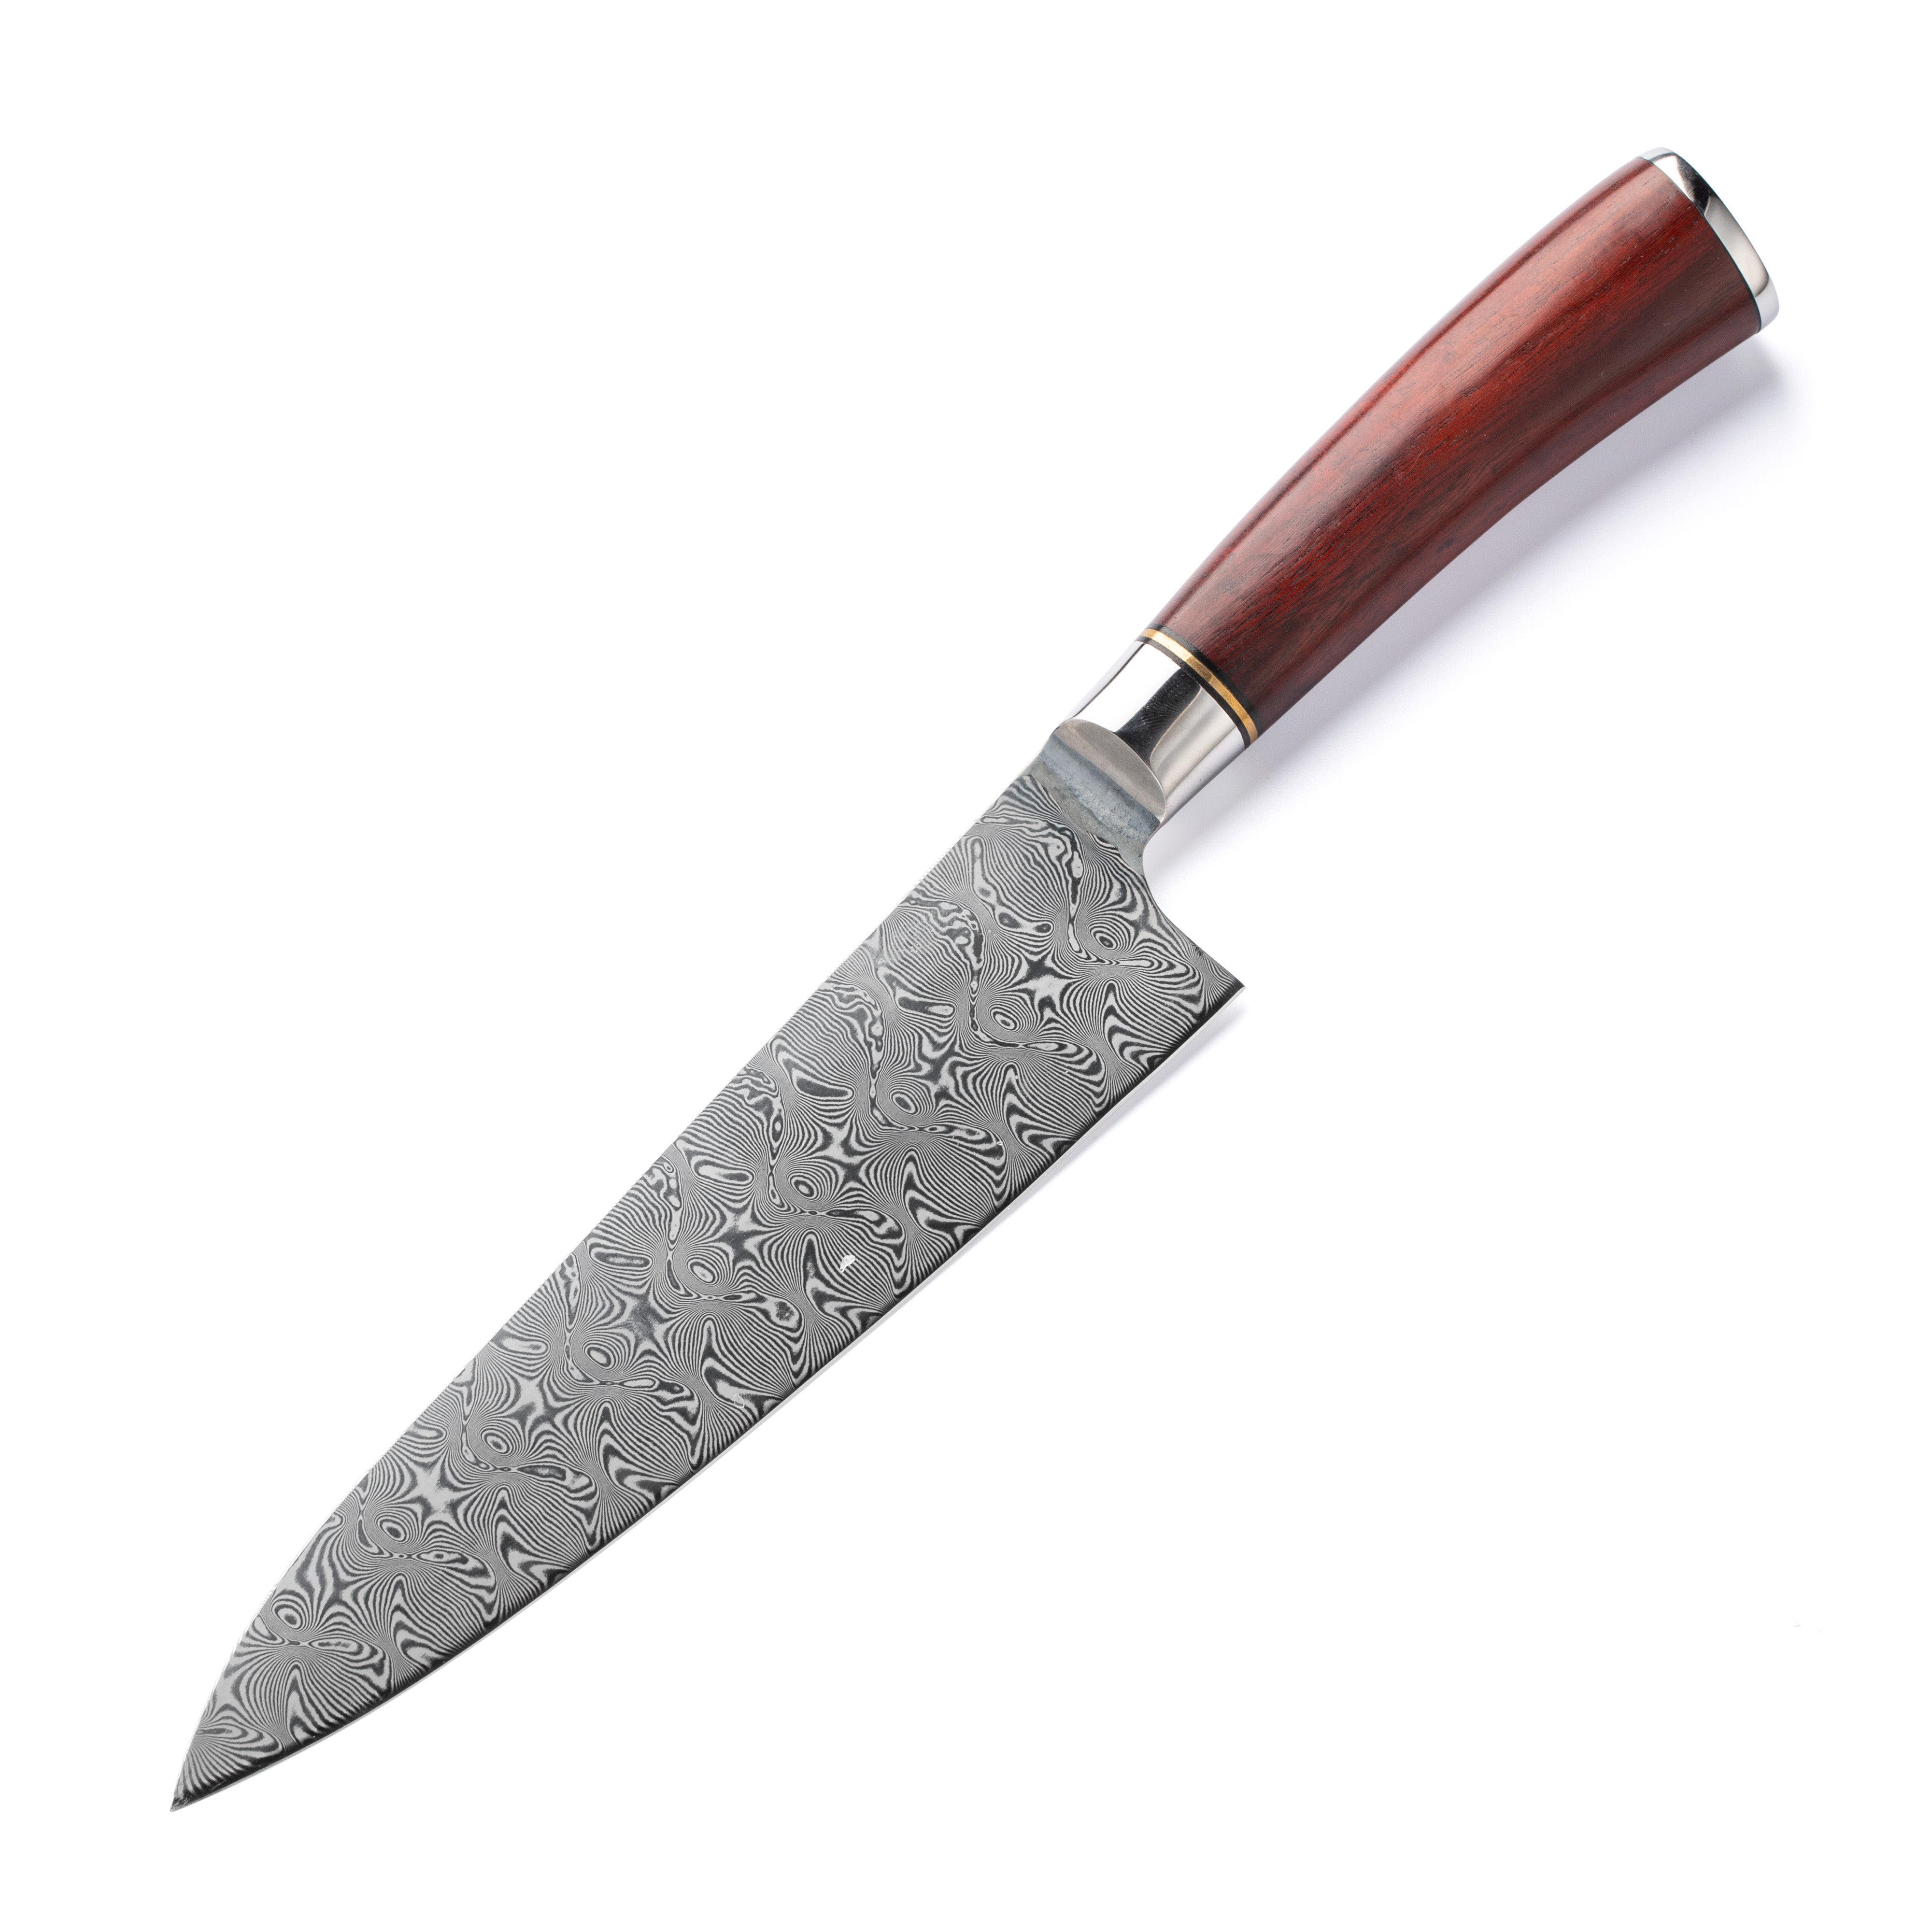 Ketuo Knife - KDM1023